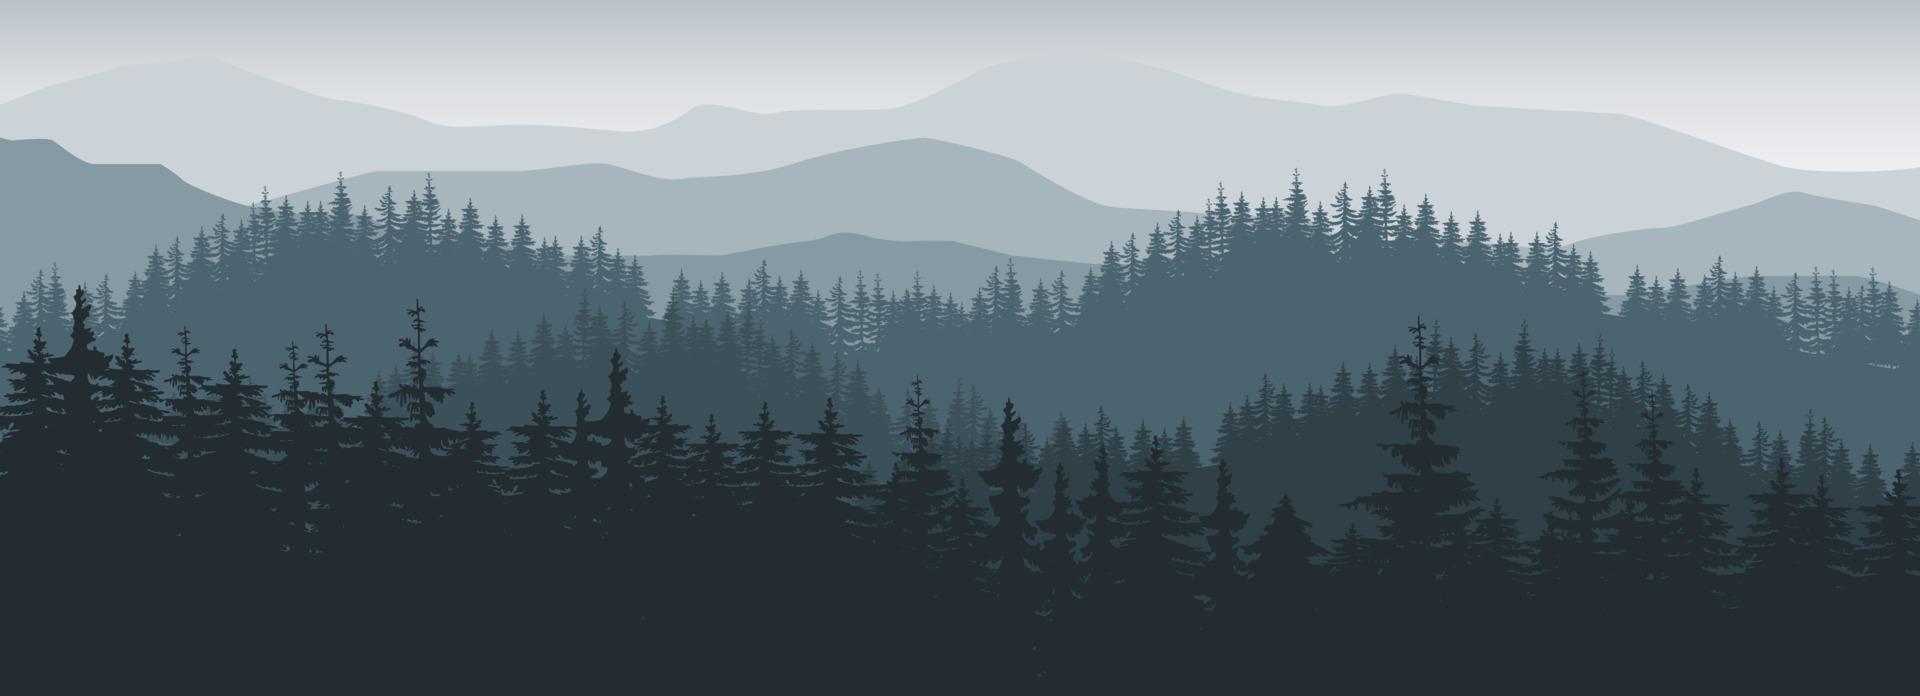 landskap bakgrund vektor med dimma av berg.